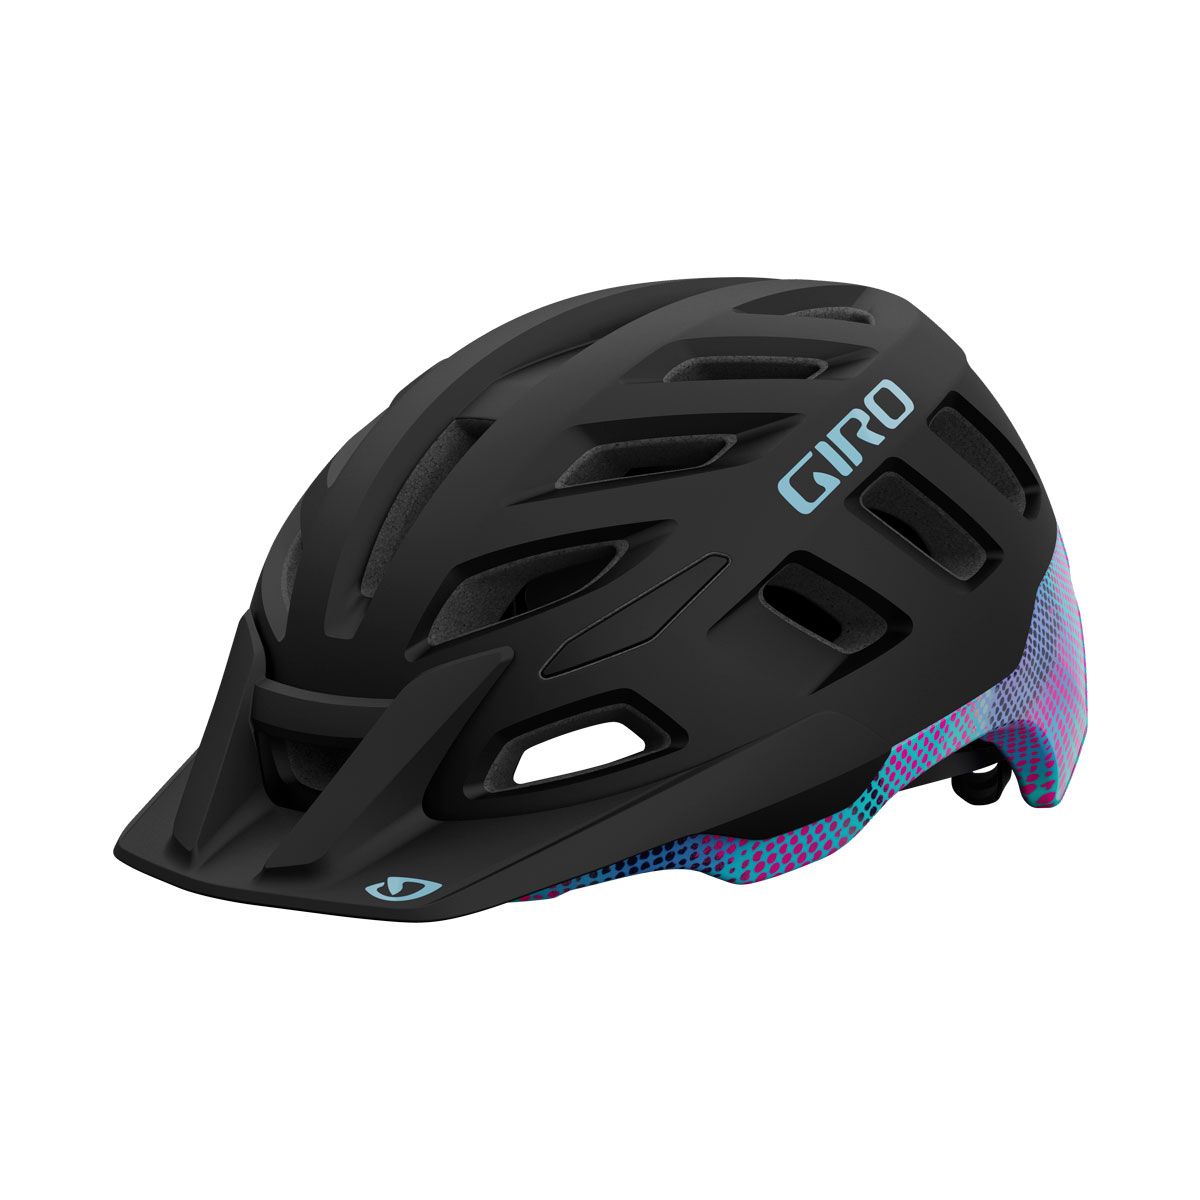 Casco Giro Radix Mips Mujer negro azul lila | enduro | bicicleta | mtb | mountain bike | btt | chica